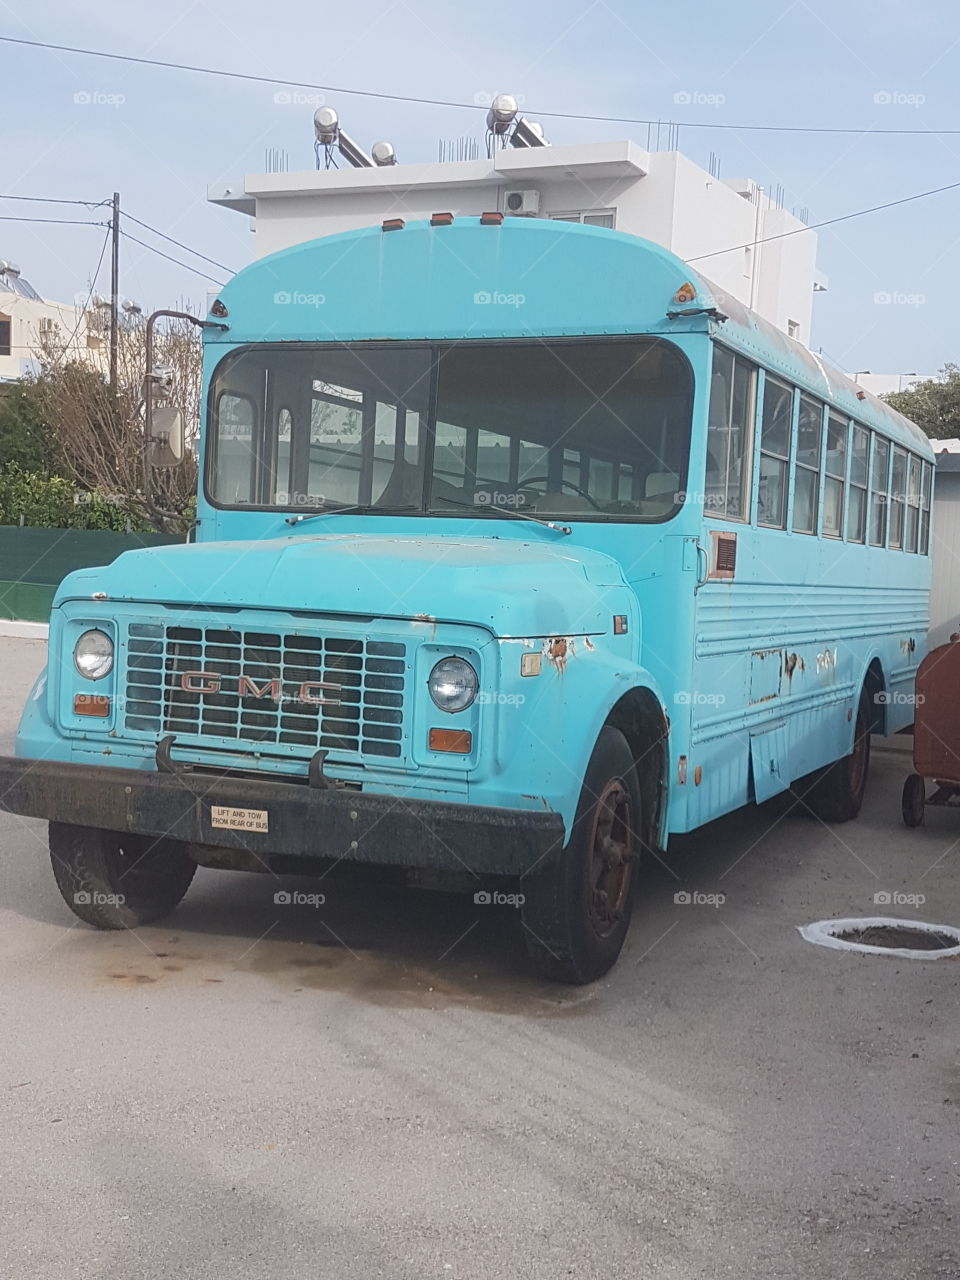 Old aqua school bus in Greece